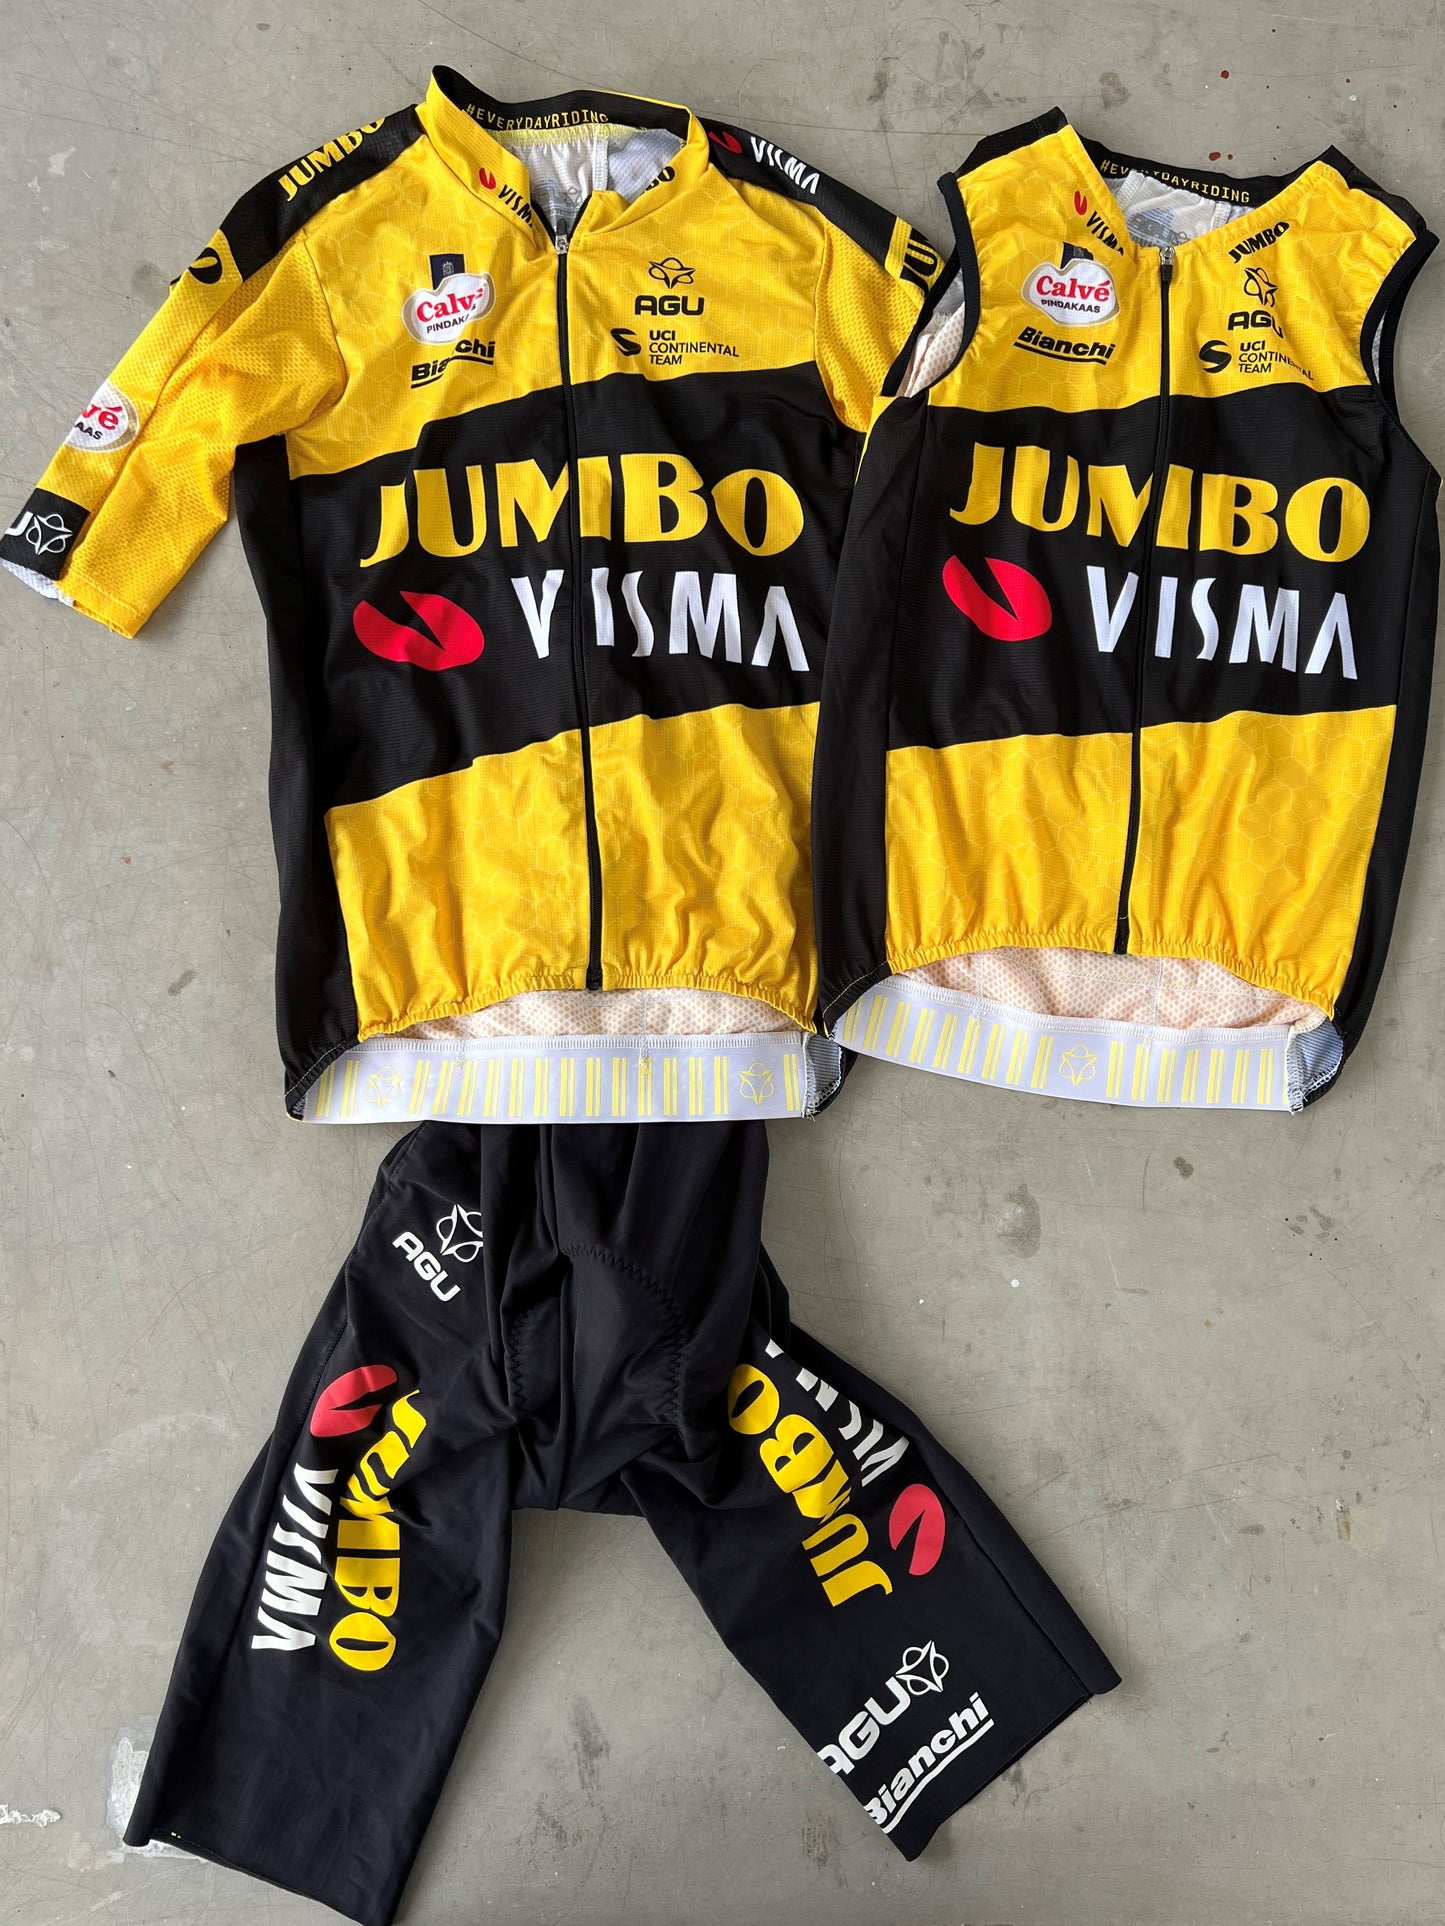 Jumbo Visma | Agu Bundle - Jersey, Bibs and Gilet | XS/S | Rider-Issued Pro Team Kit